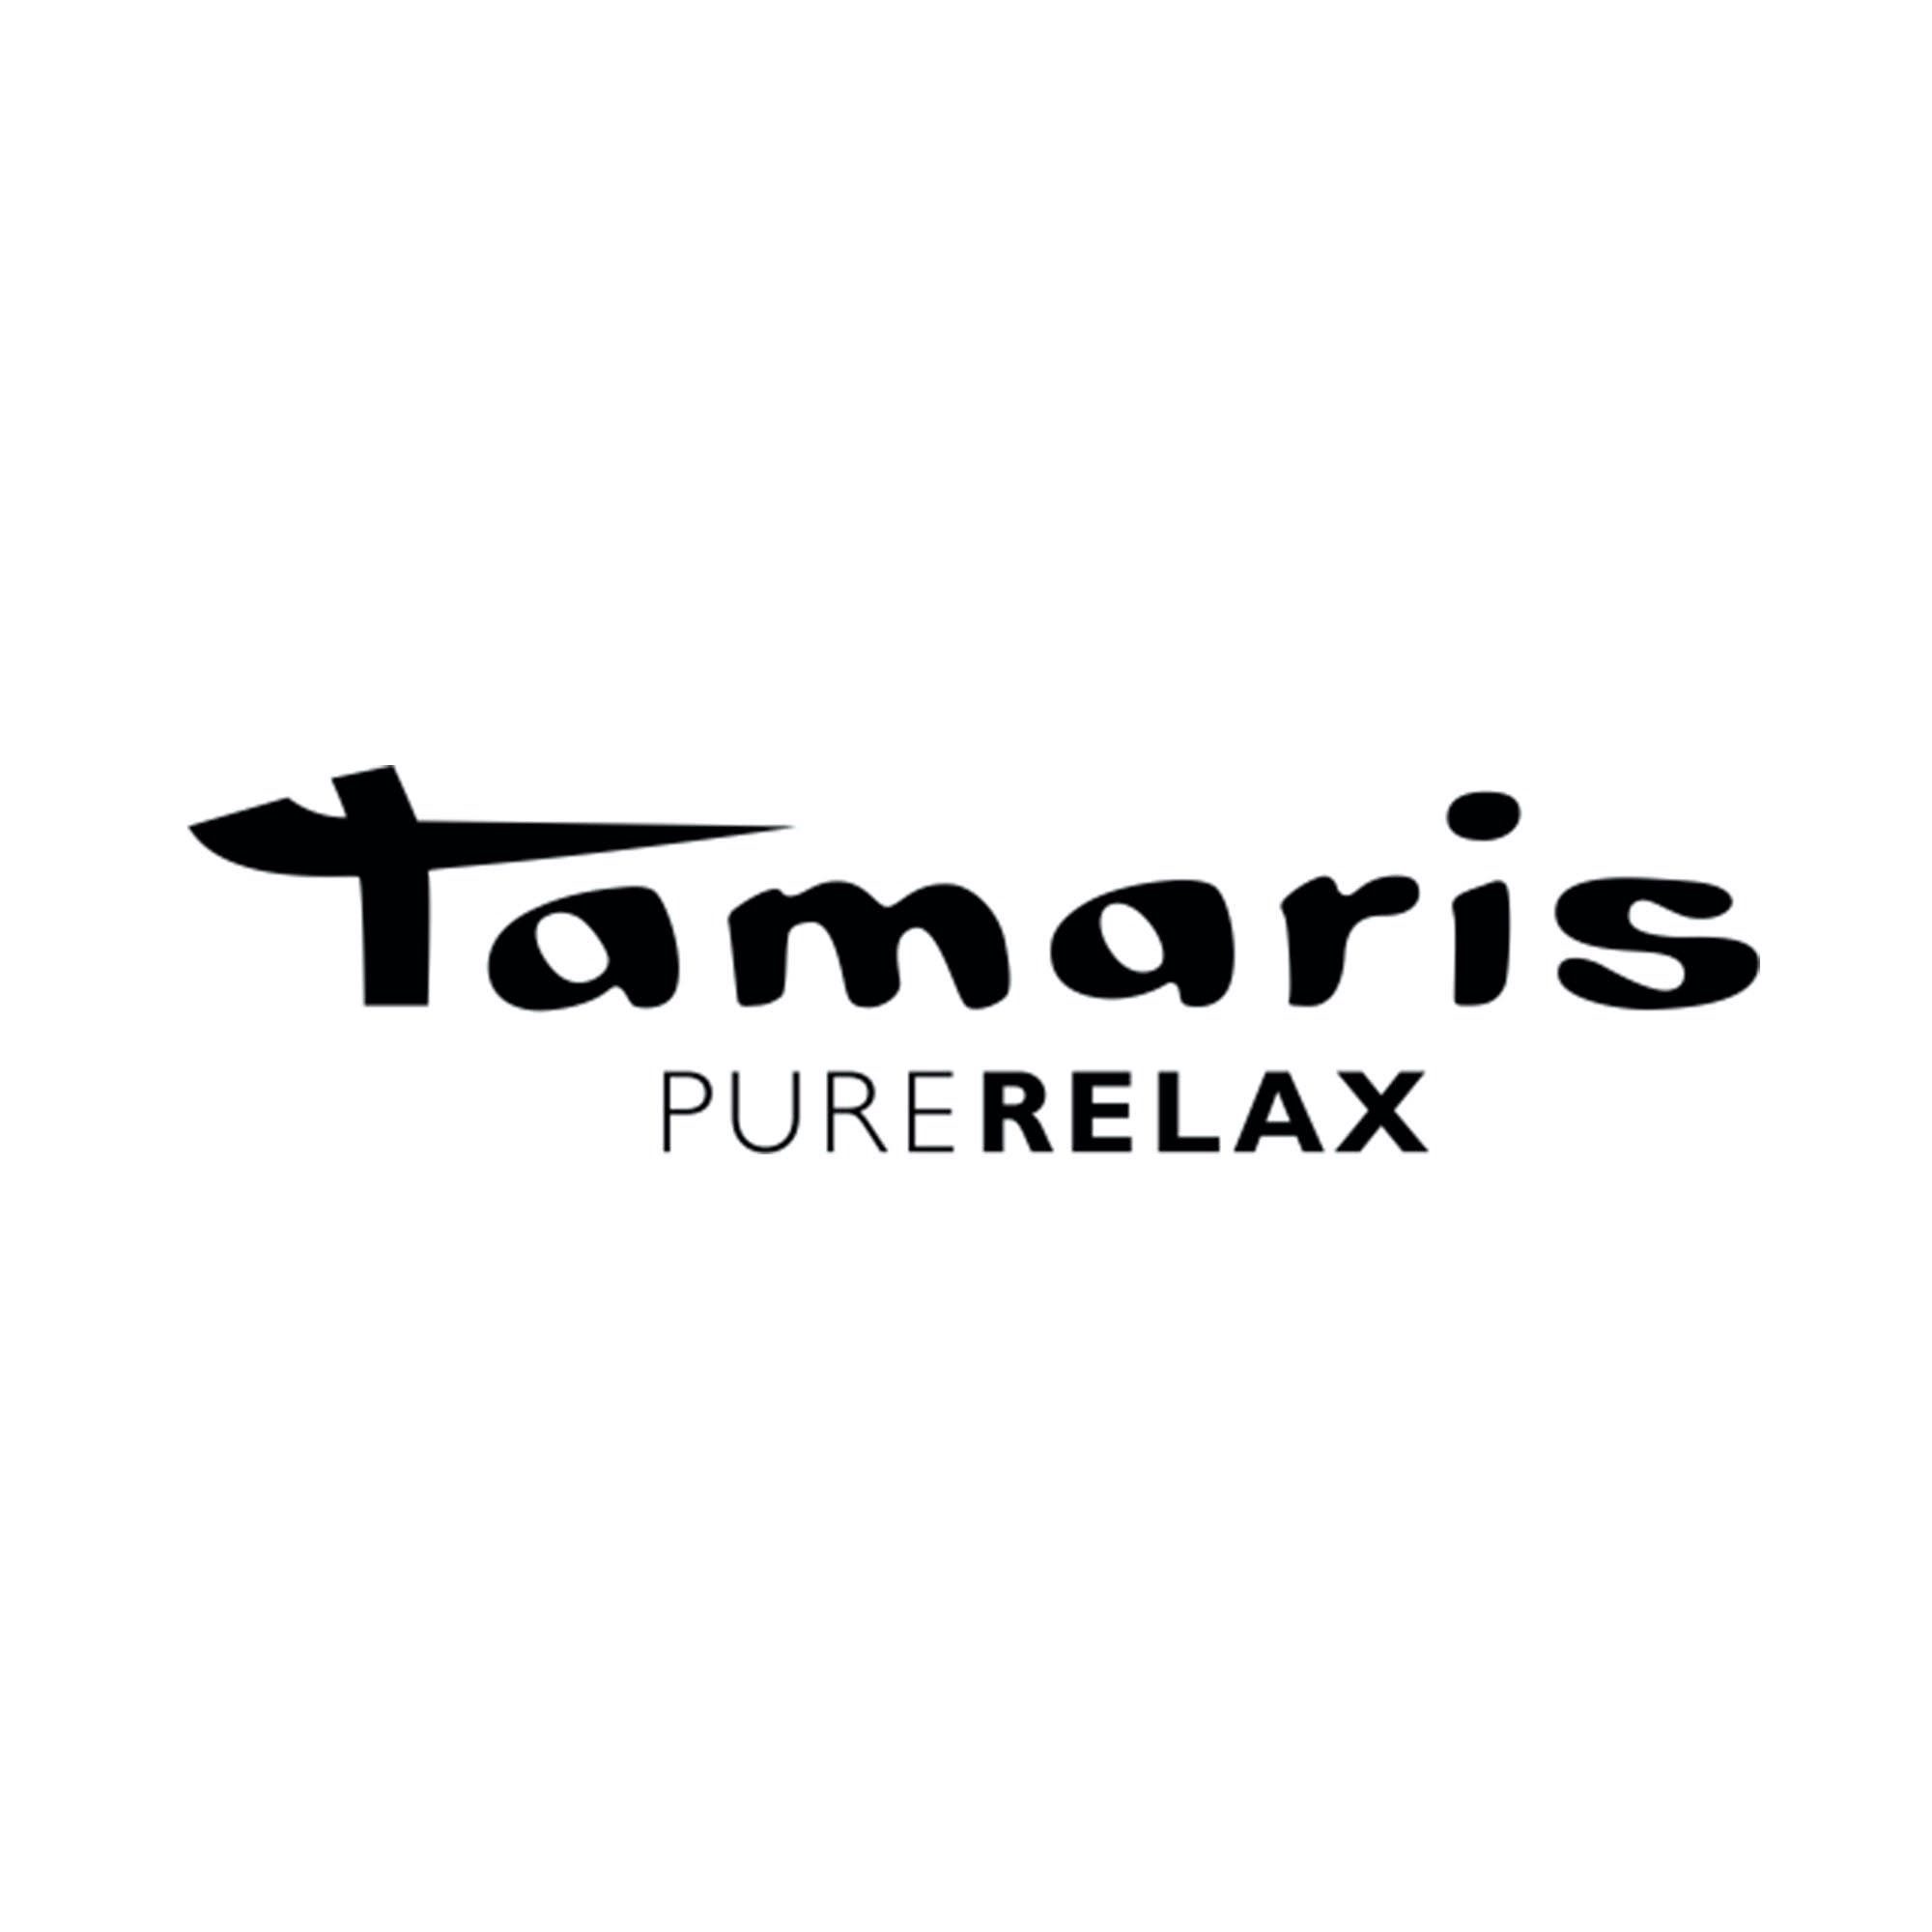 Tamaris Pure Relax